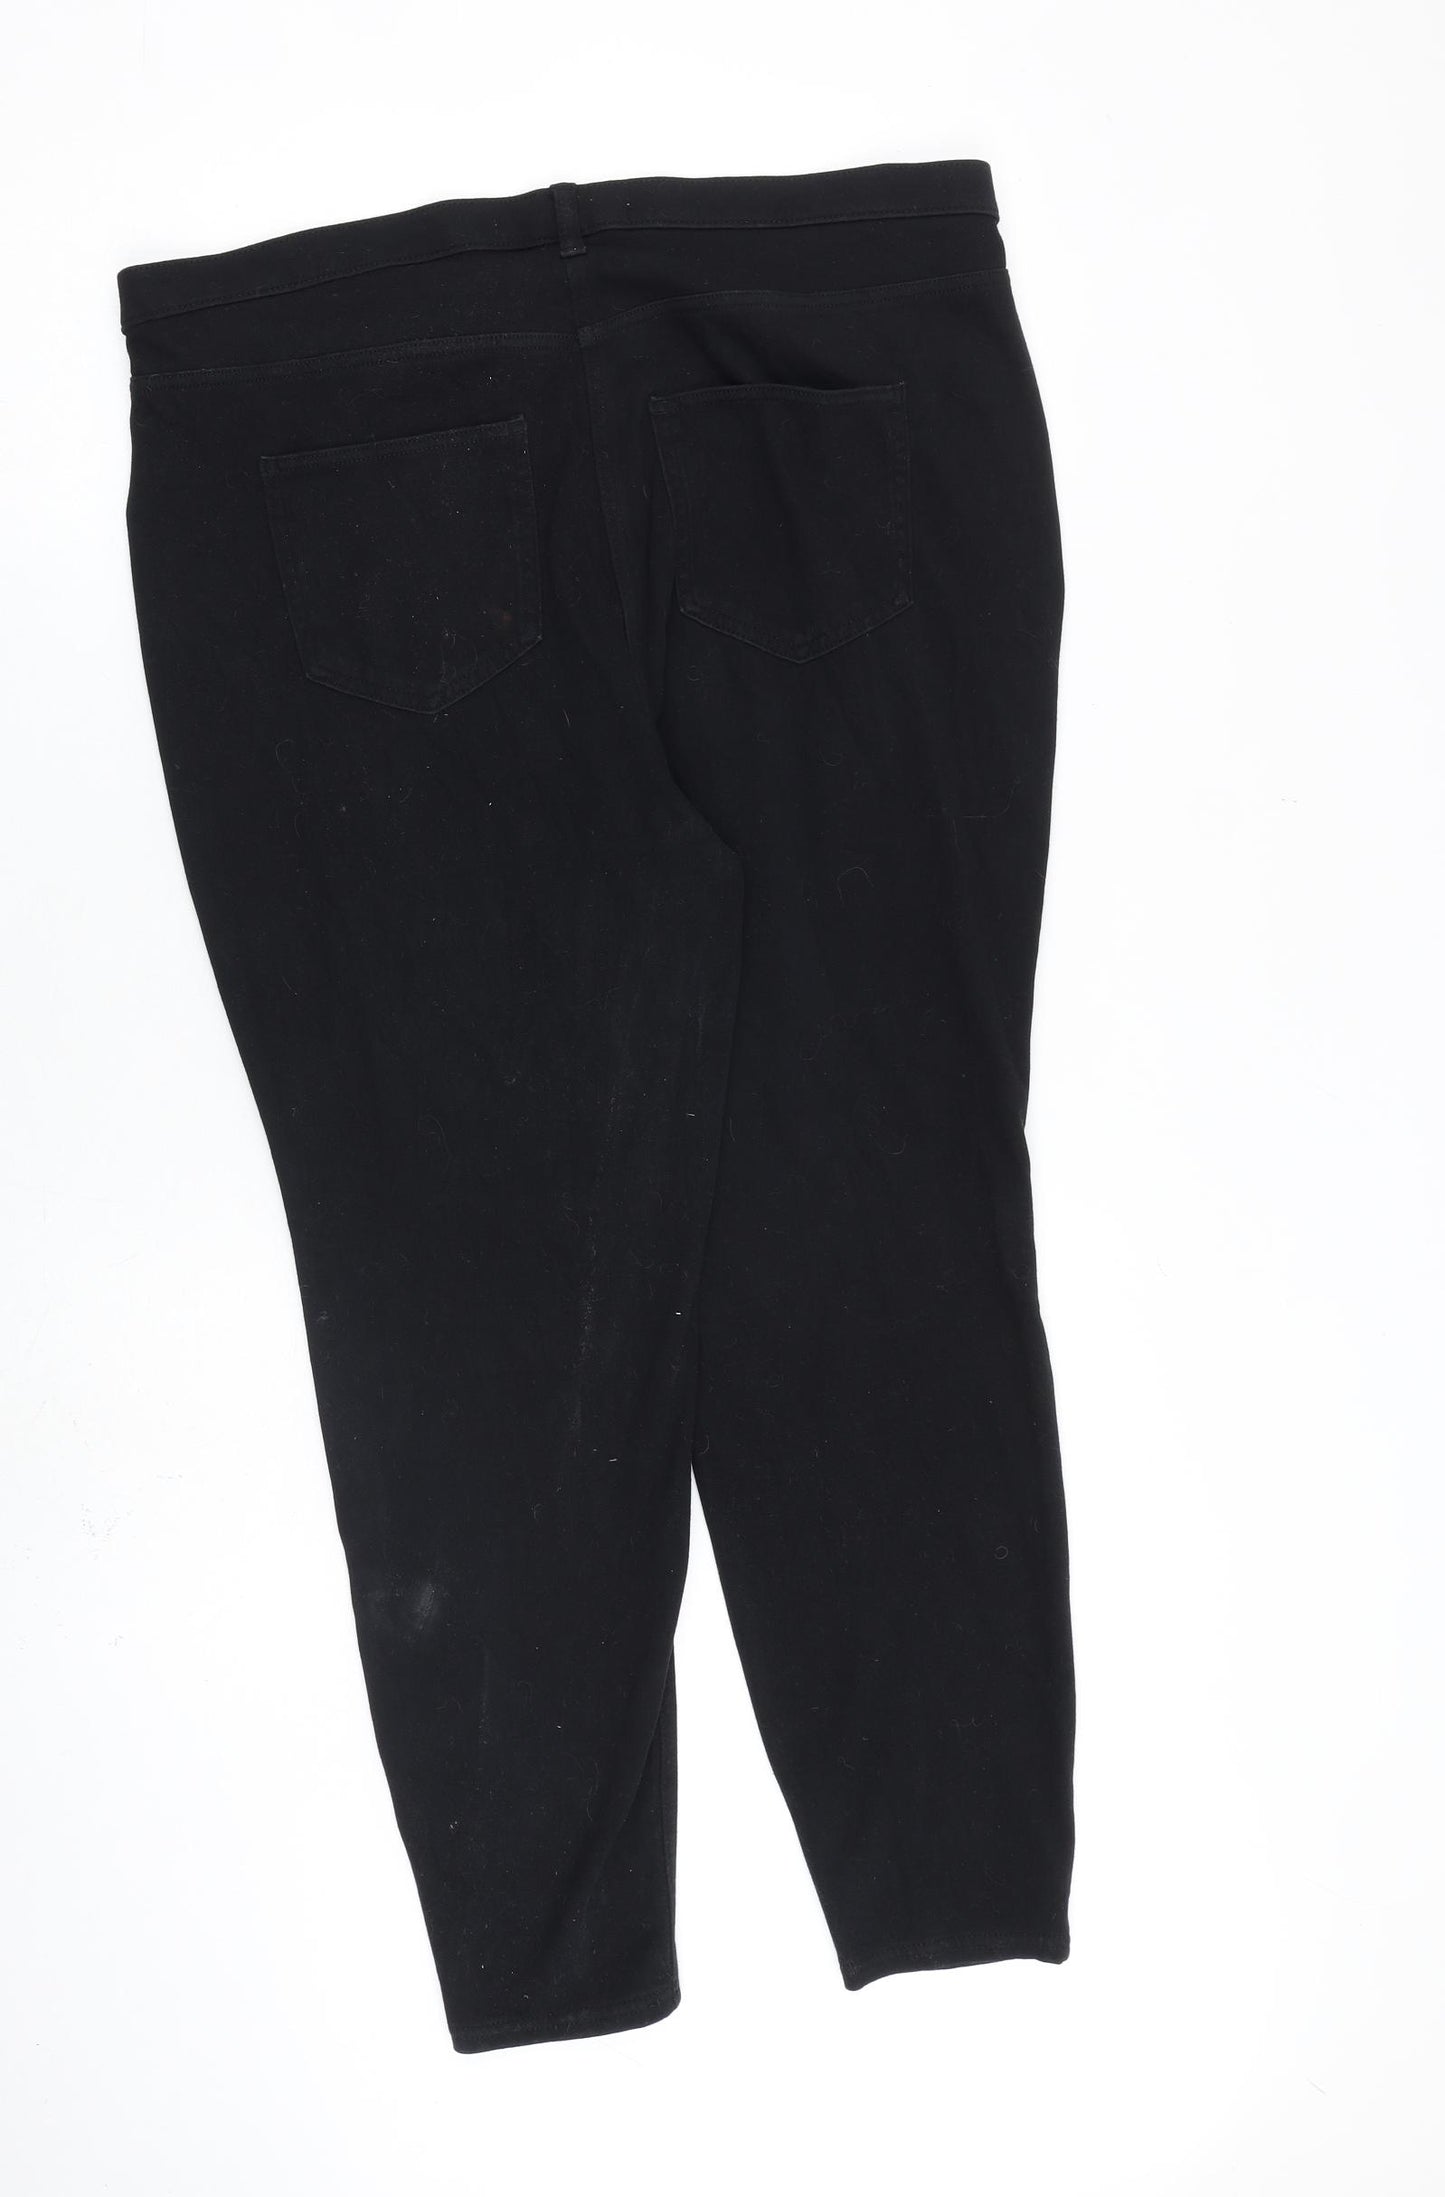 NEXT Womens Black Cotton Jegging Jeans Size 20 L27 in Regular